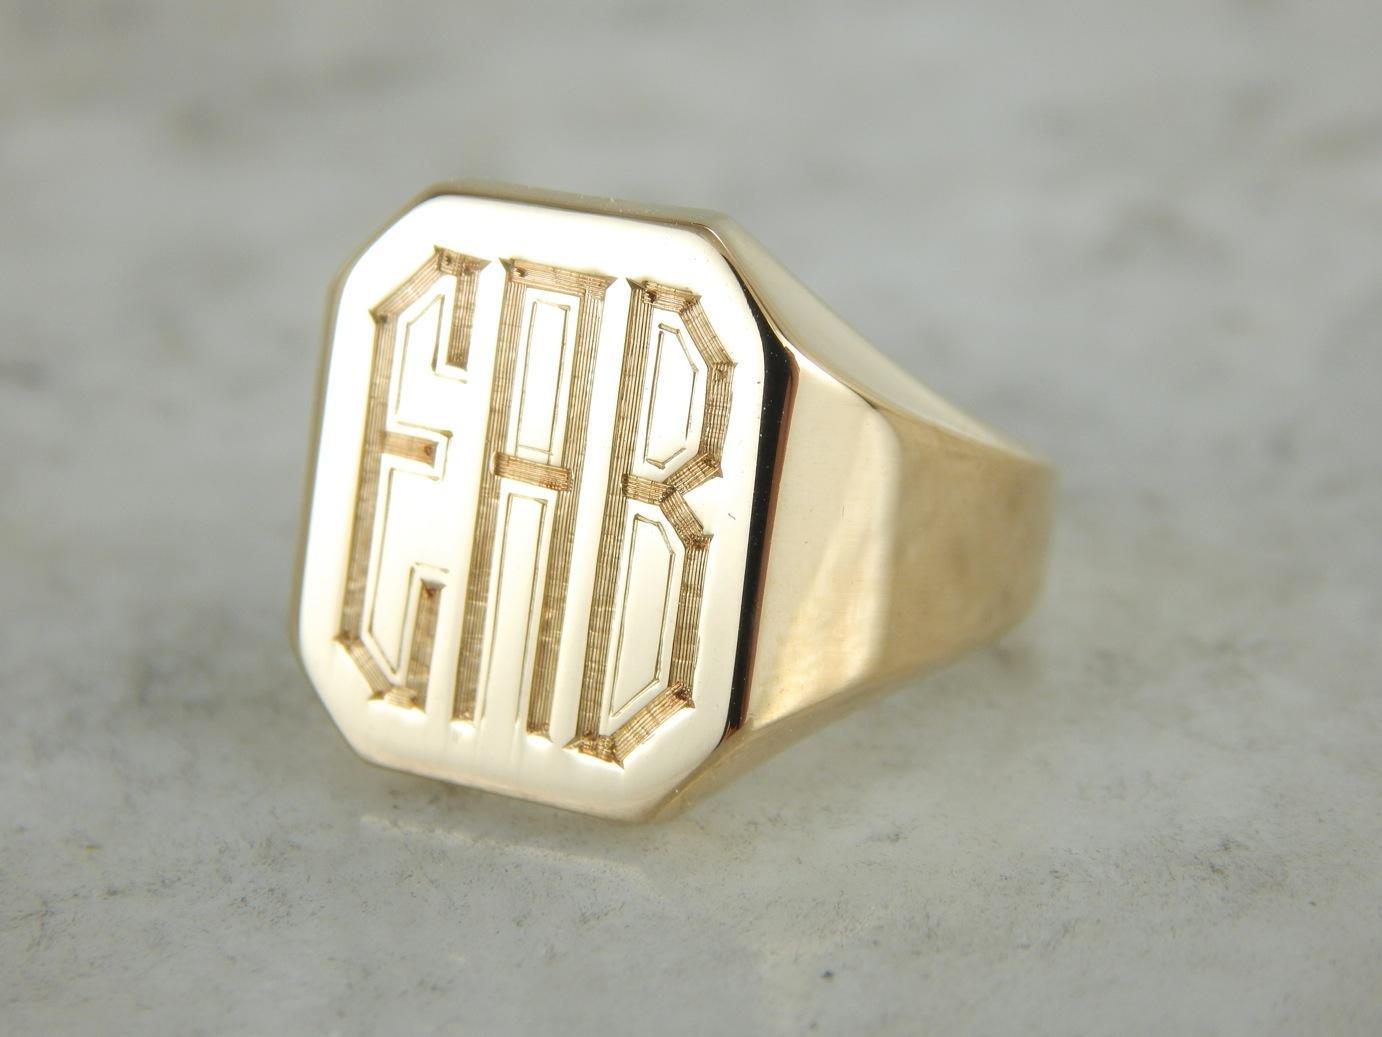 Stunning Yellow Gold GEJ Monogrammed Signet Ring